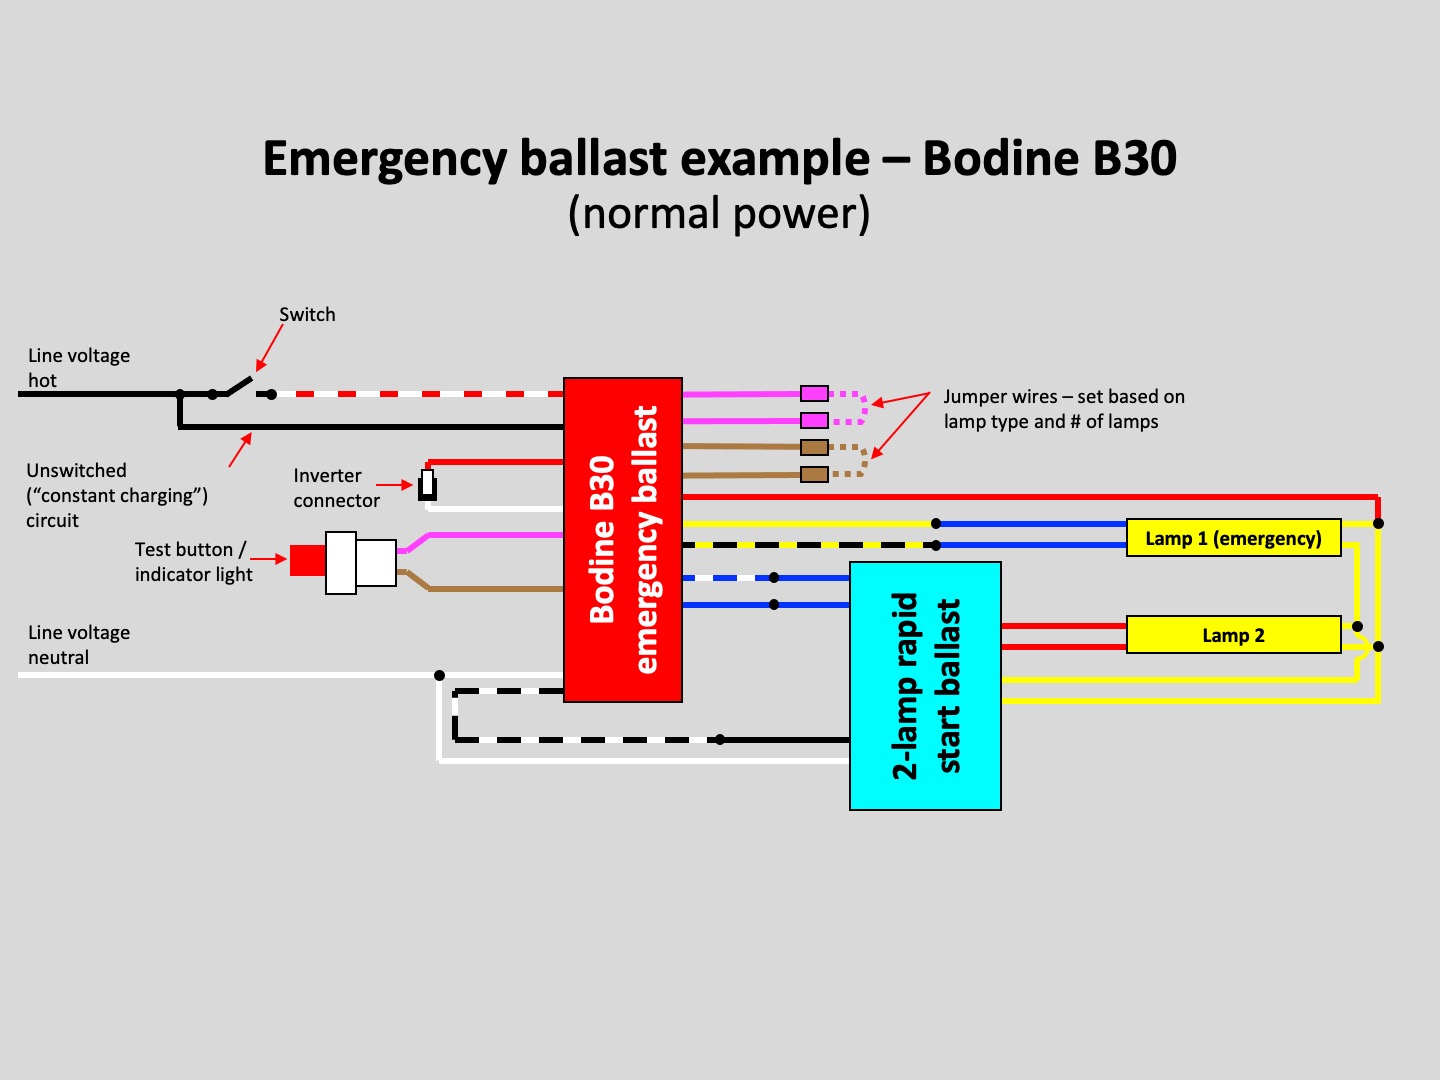 Emergency ballast example – Bodine B30 (normal power)